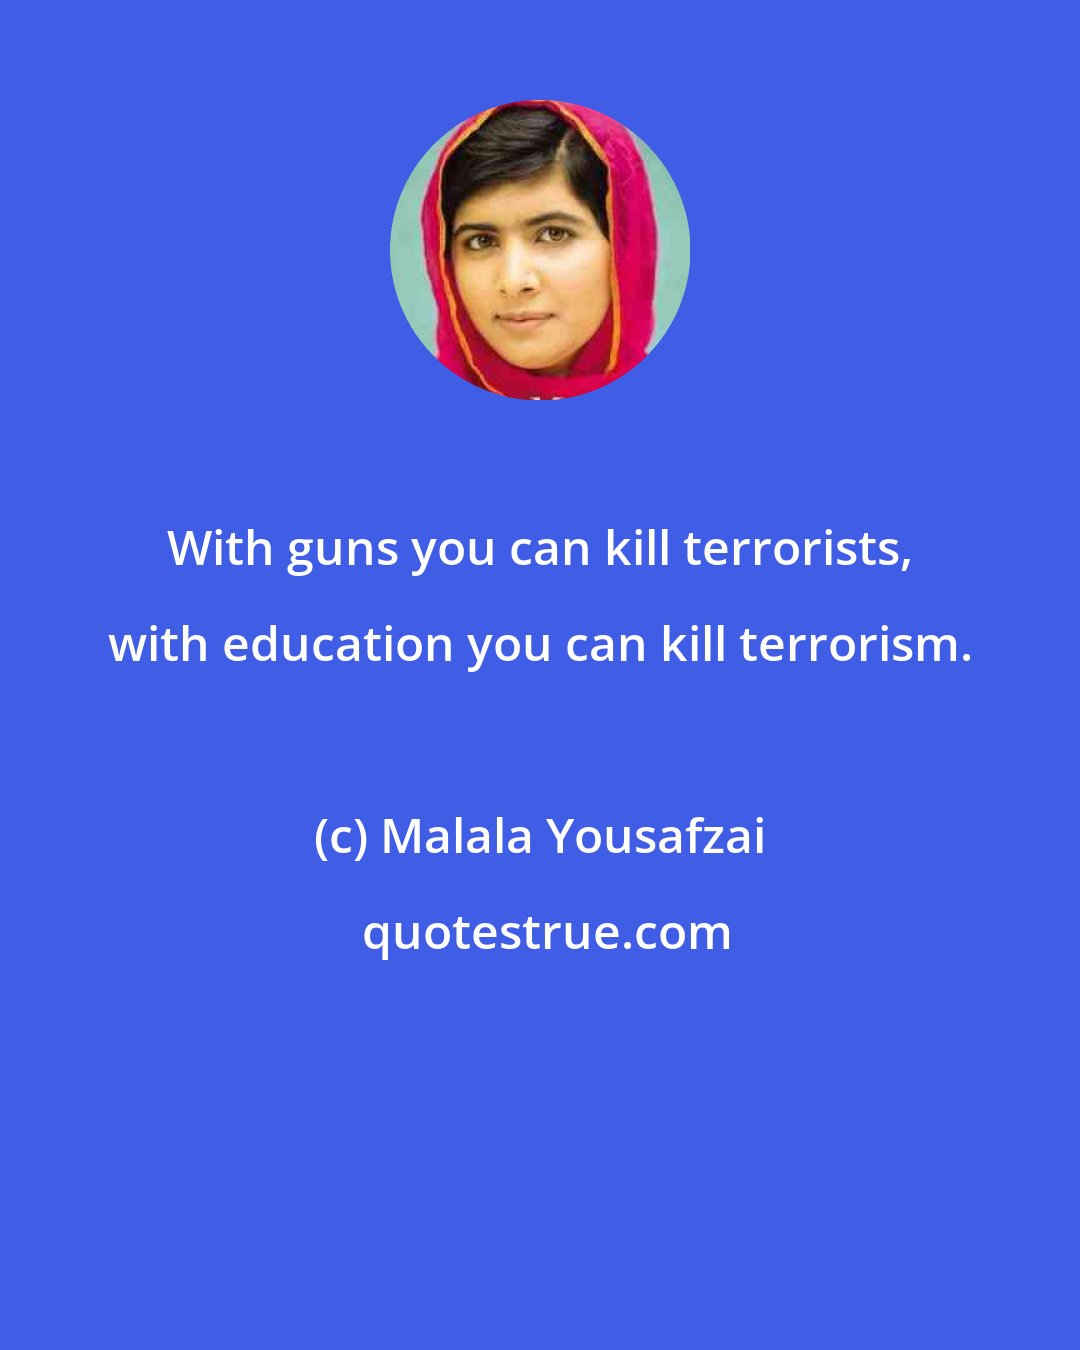 Malala Yousafzai: With guns you can kill terrorists, with education you can kill terrorism.